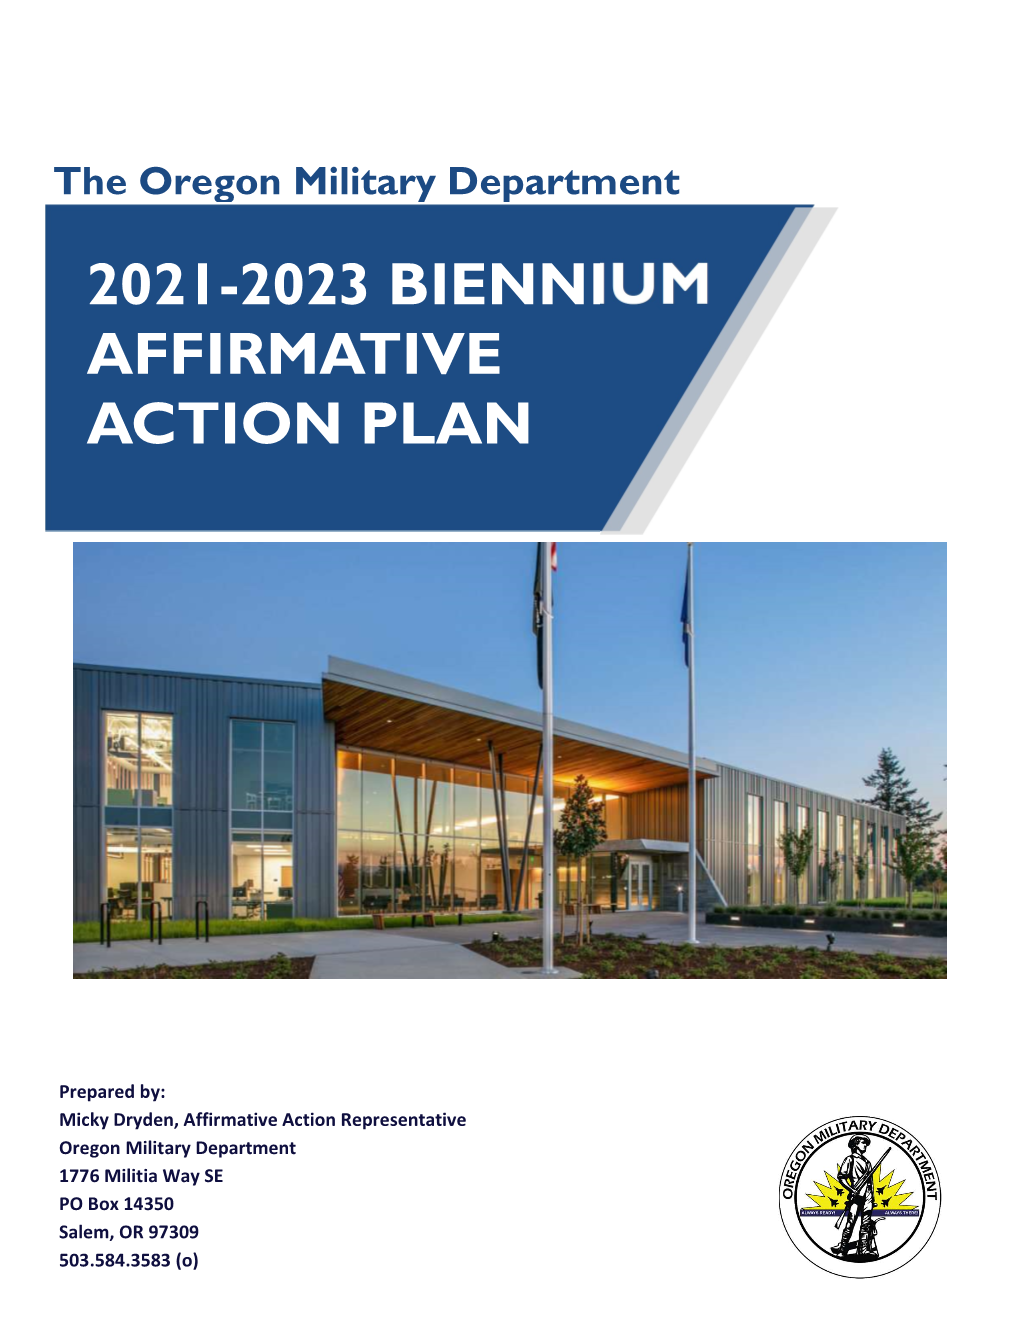 2021-2023 Biennium Affirmative Action Plan